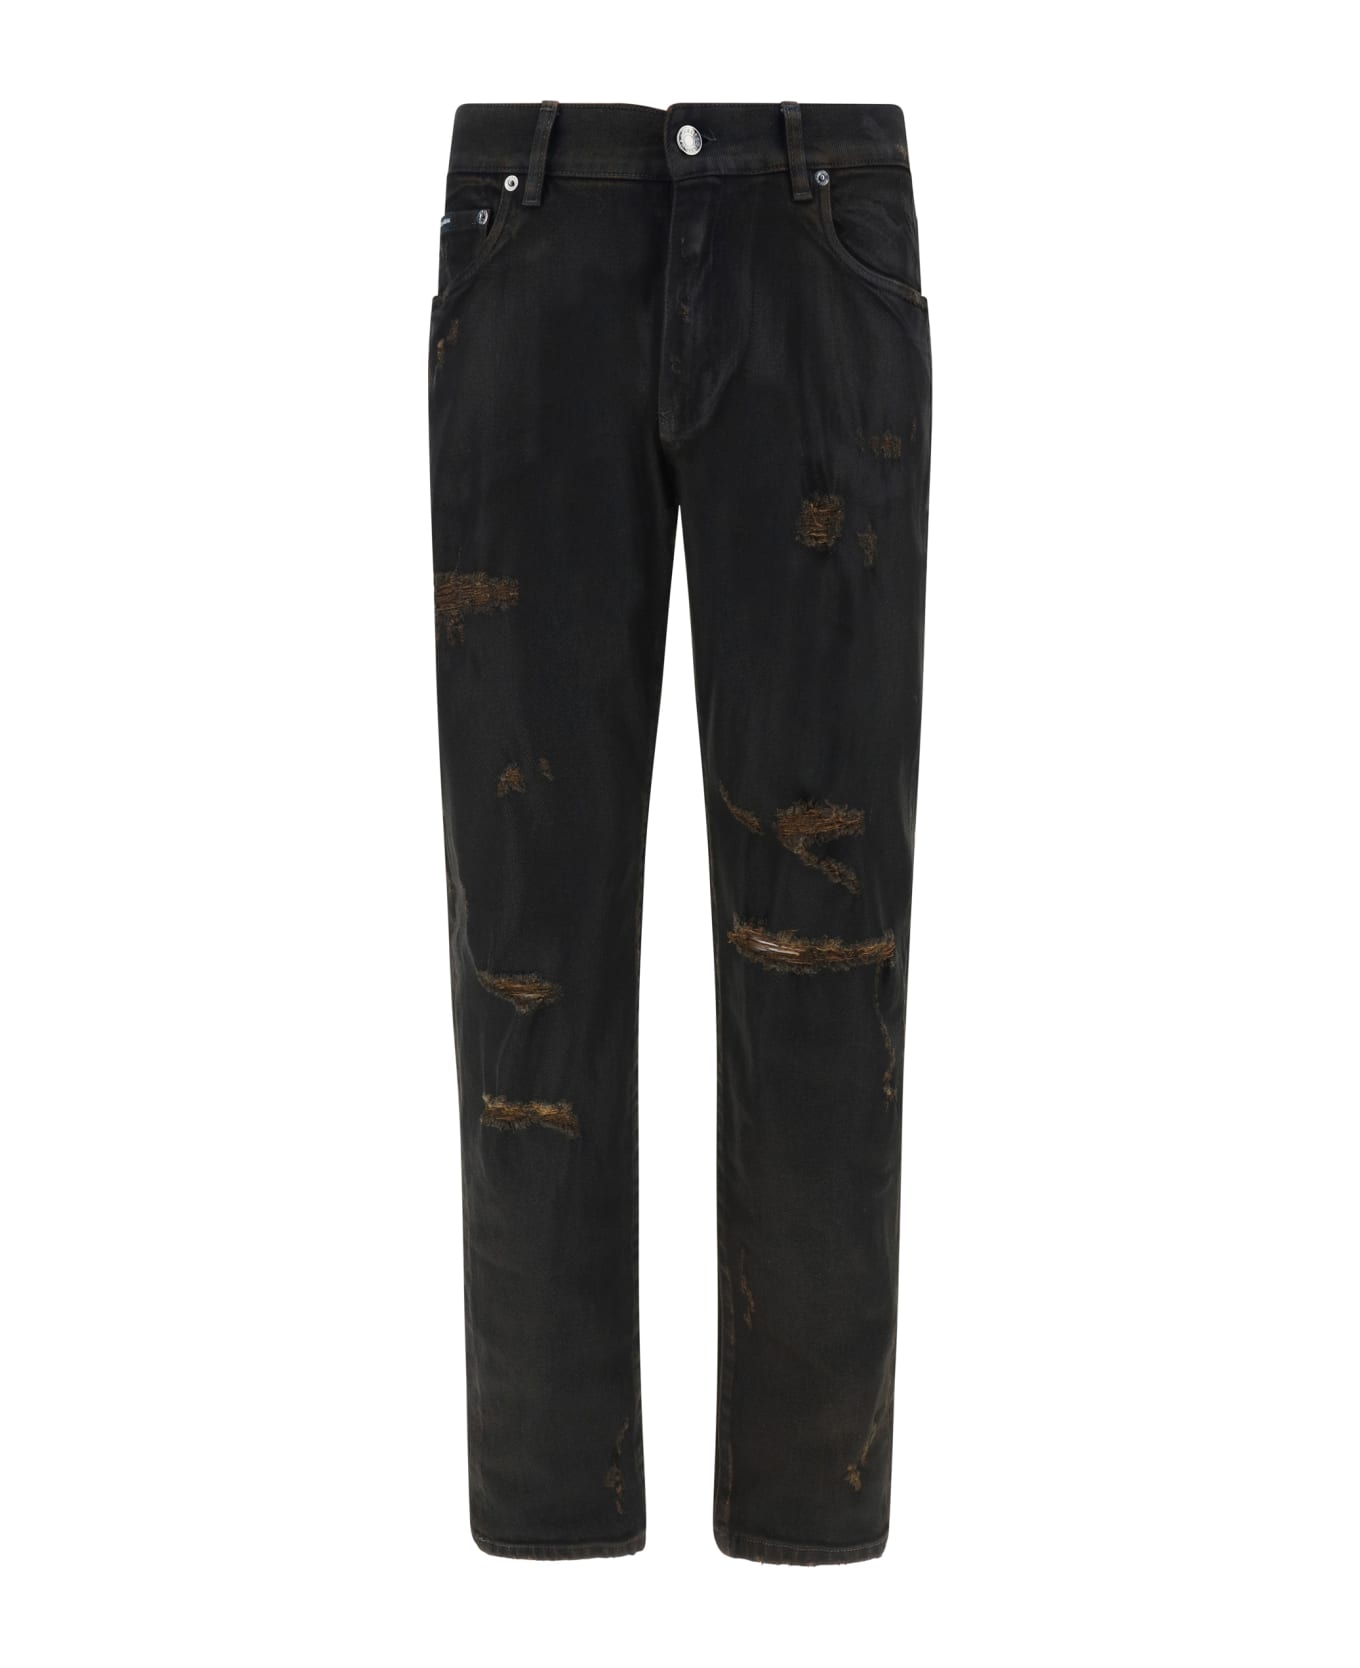 Dolce & Gabbana Slim Fit Jeans - Variante Abbinata ボトムス